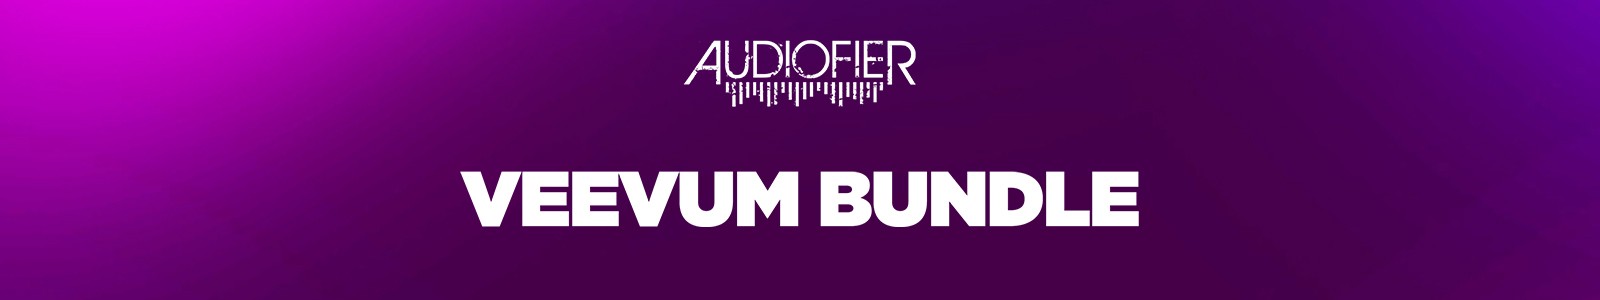 Veevum 1-12 Bundle by Audiofier